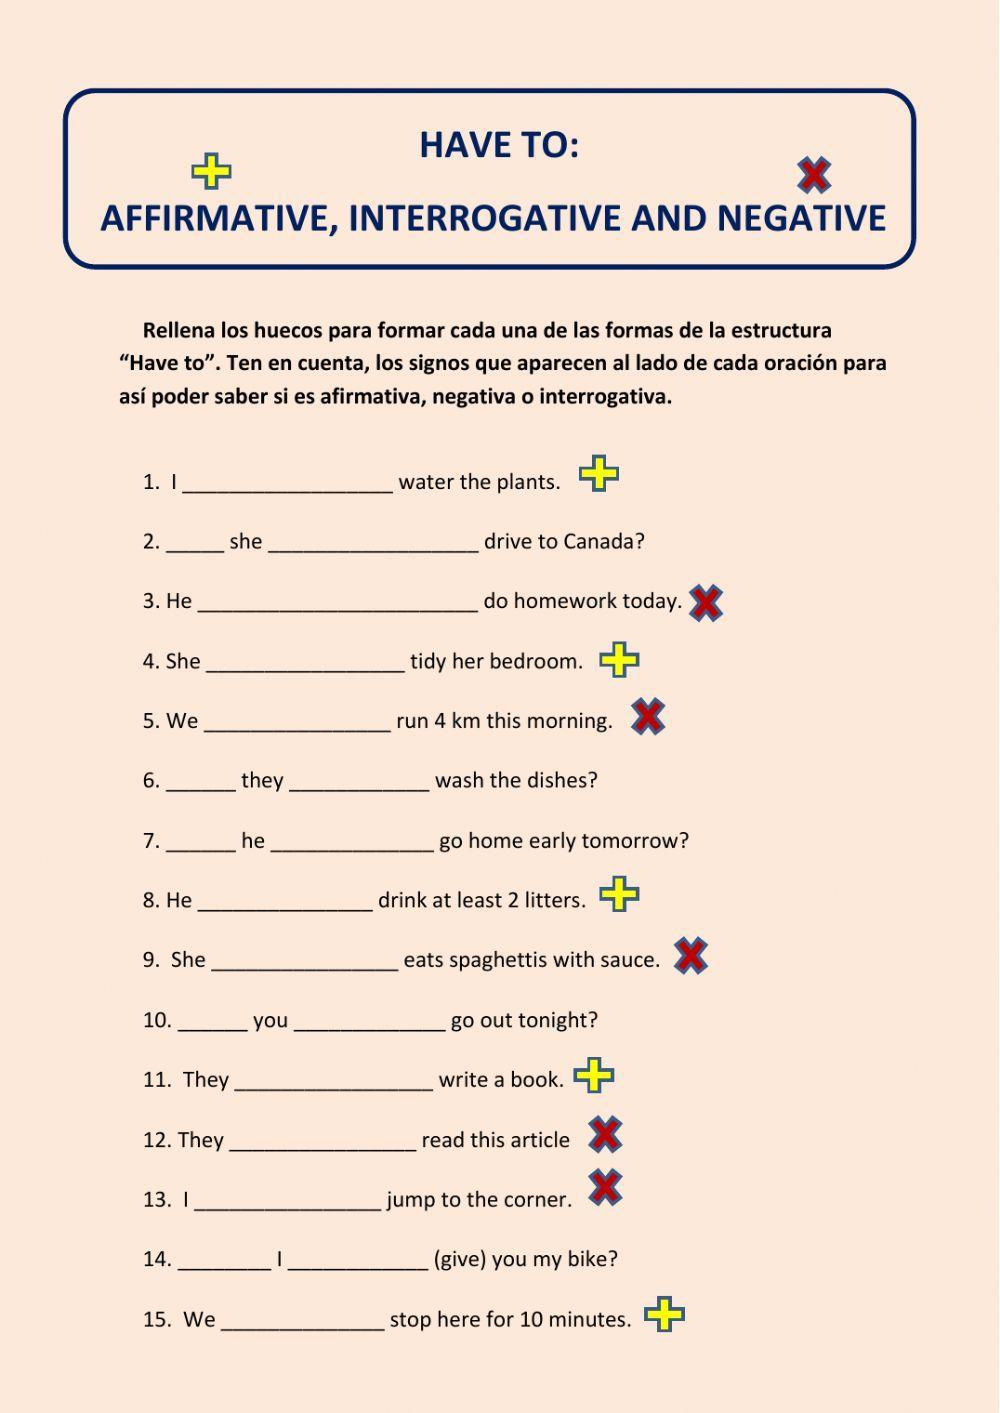 6th - Have to (affirmative, negative and interrogative sentences together)